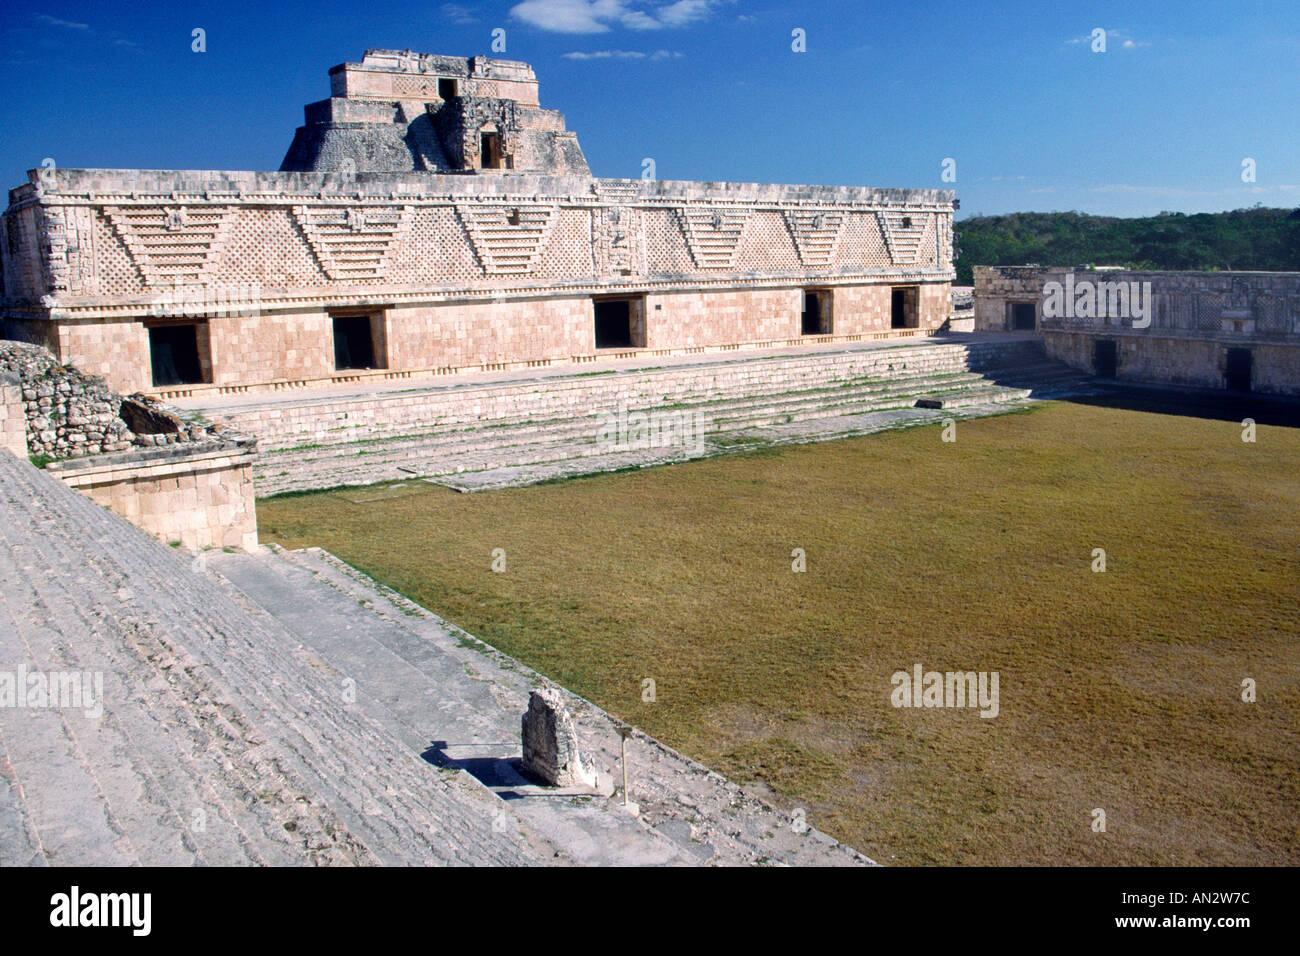 L'antiq Quadrangle, partie de l'Uxmal ruines mayas dans l'état du Yucatan au Mexique. Banque D'Images